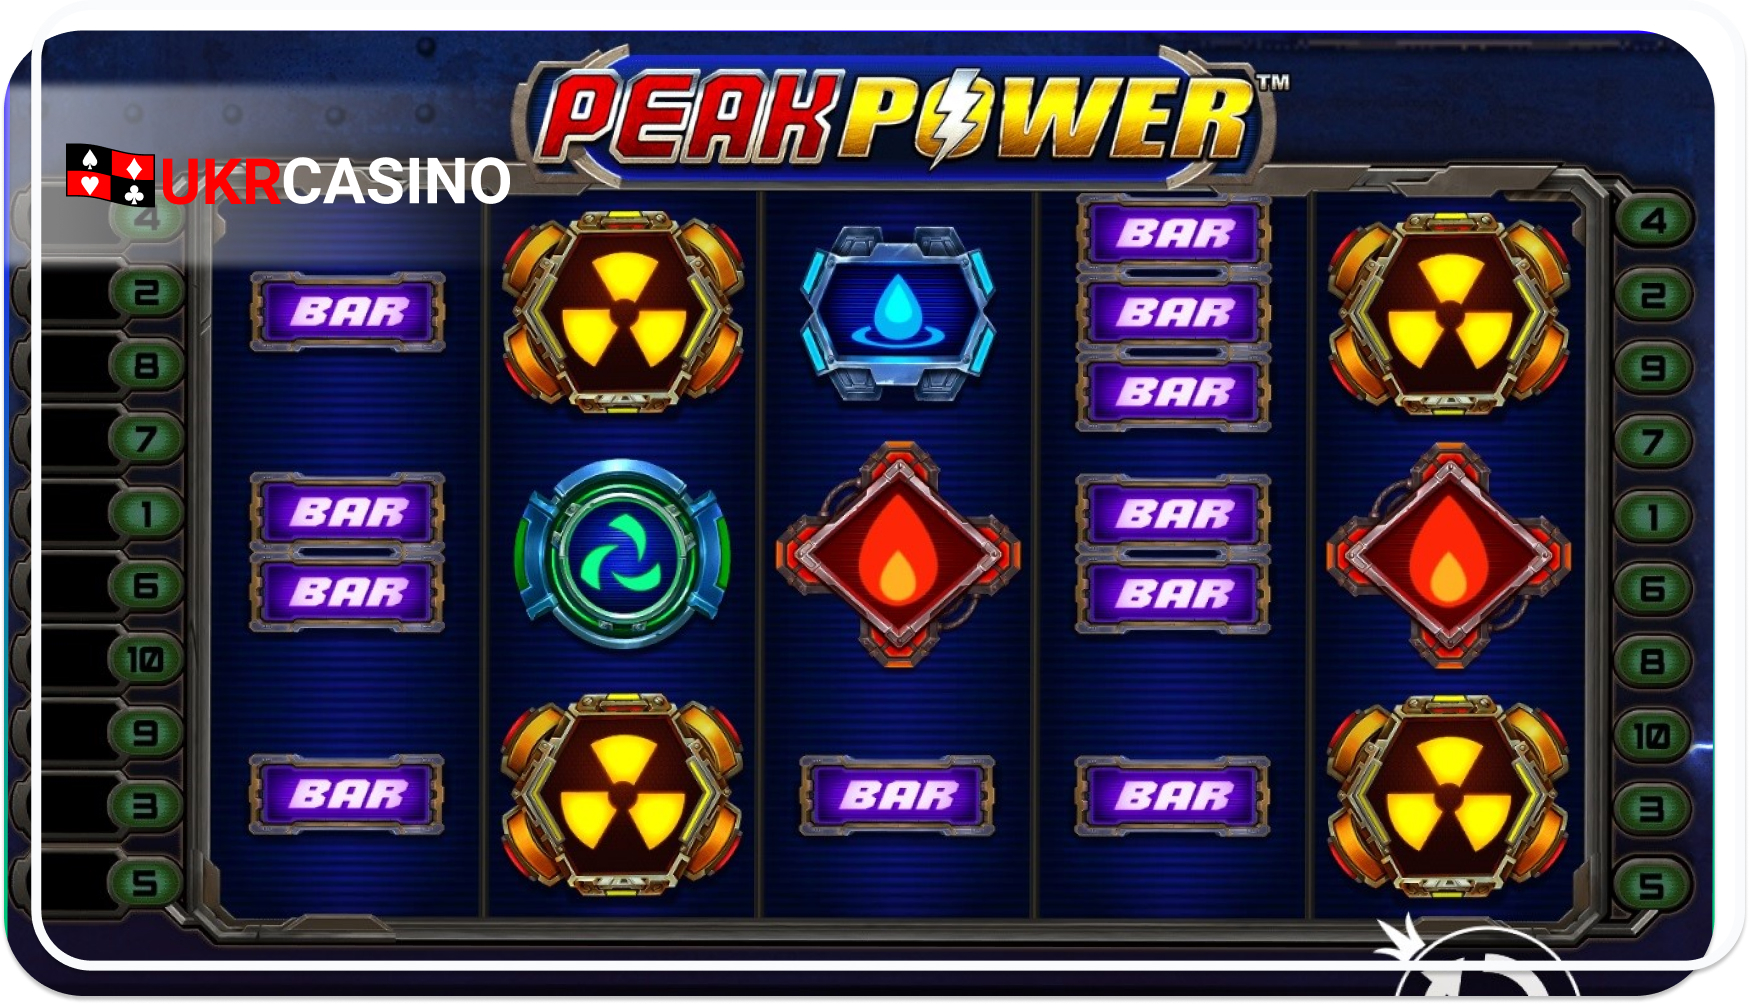 Peak Power - Pragmatic Play slot